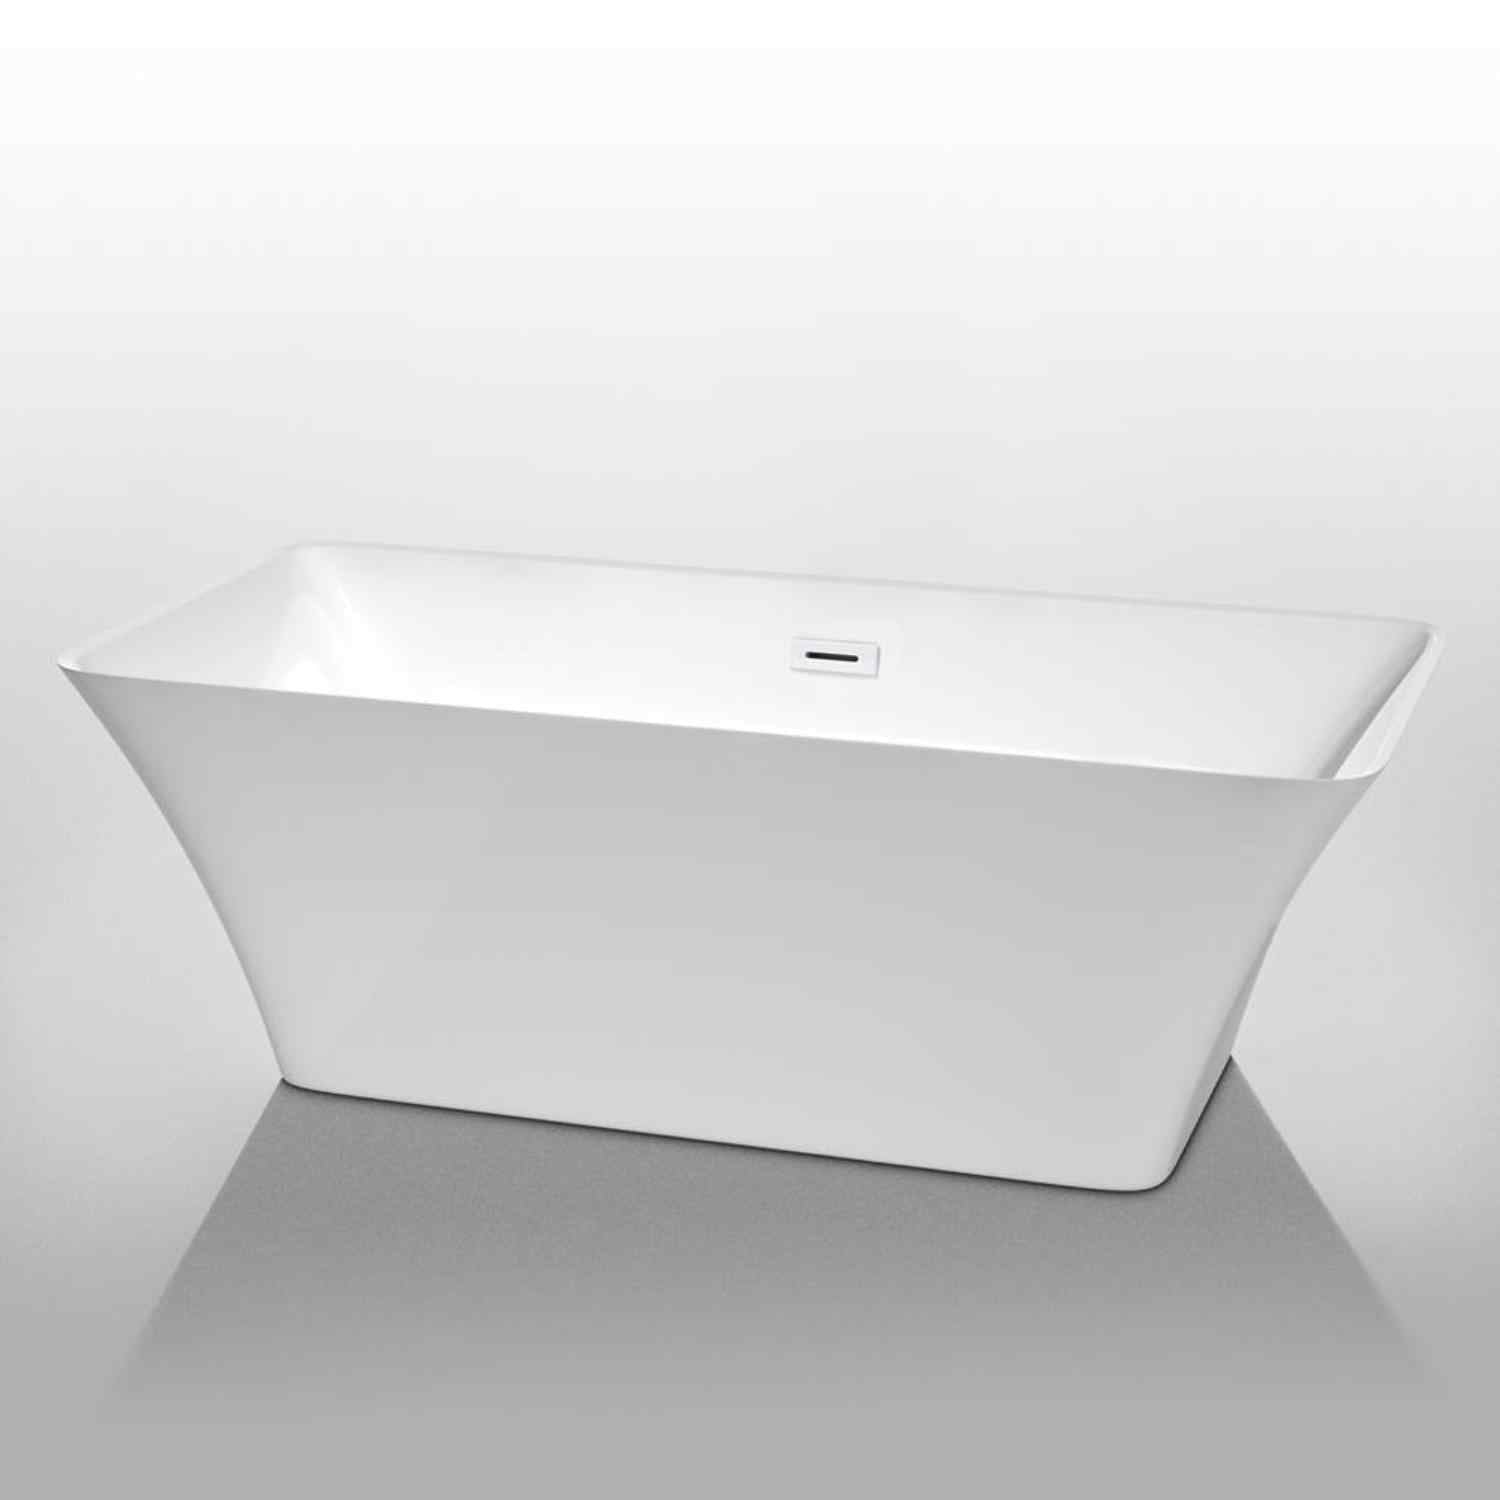 Wyndham collection Tiffany 67 Inch Freestanding Bathtub in White image